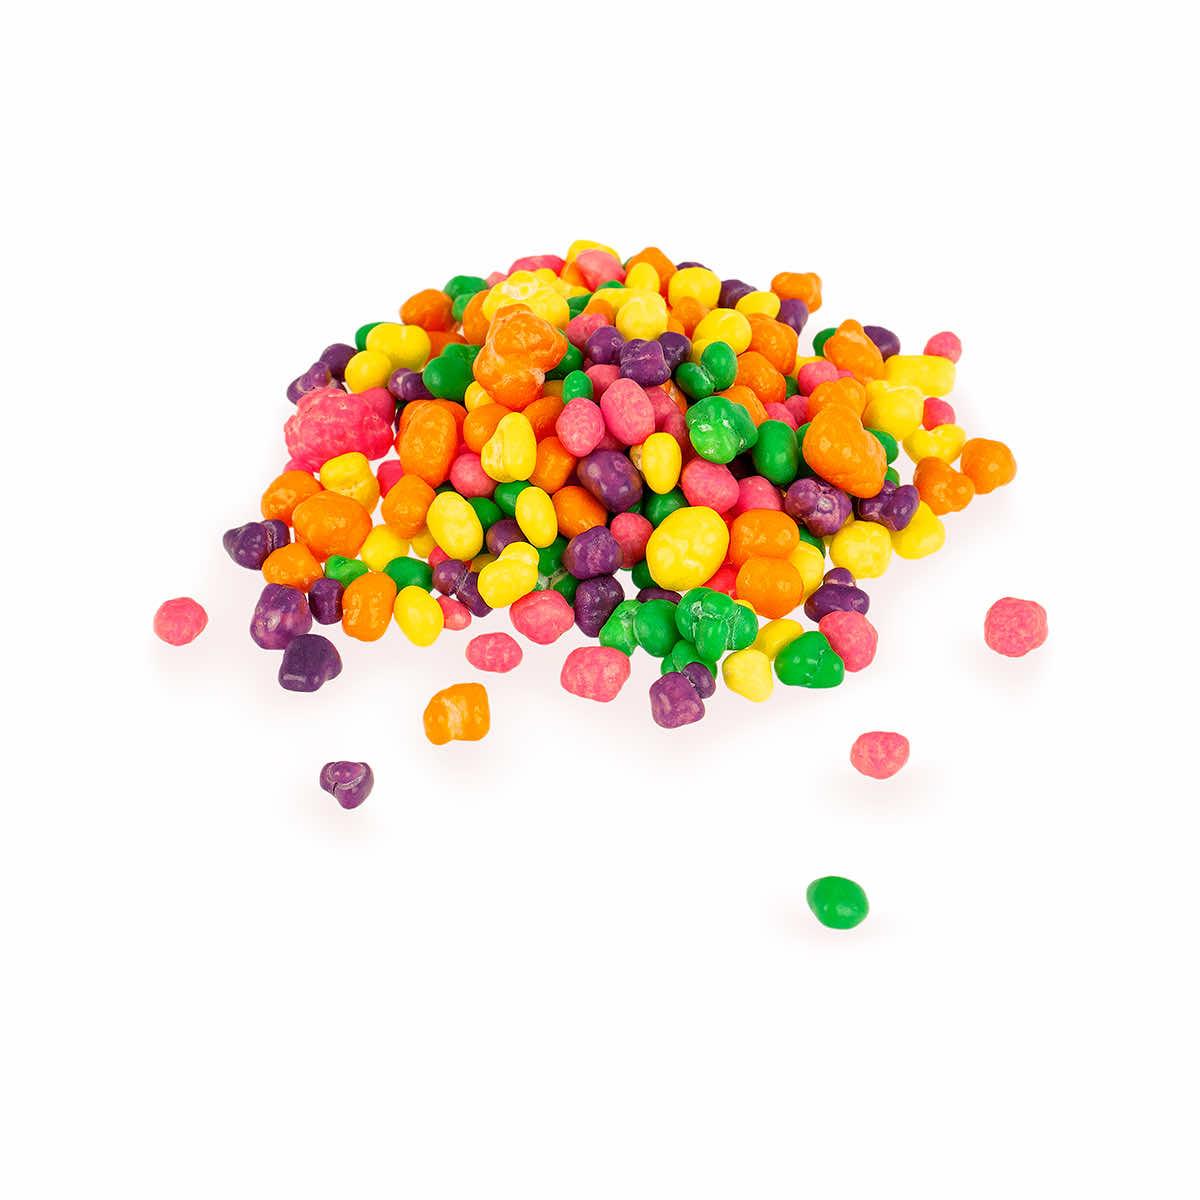  Rainbow Nerds Candy - 1 Lb.